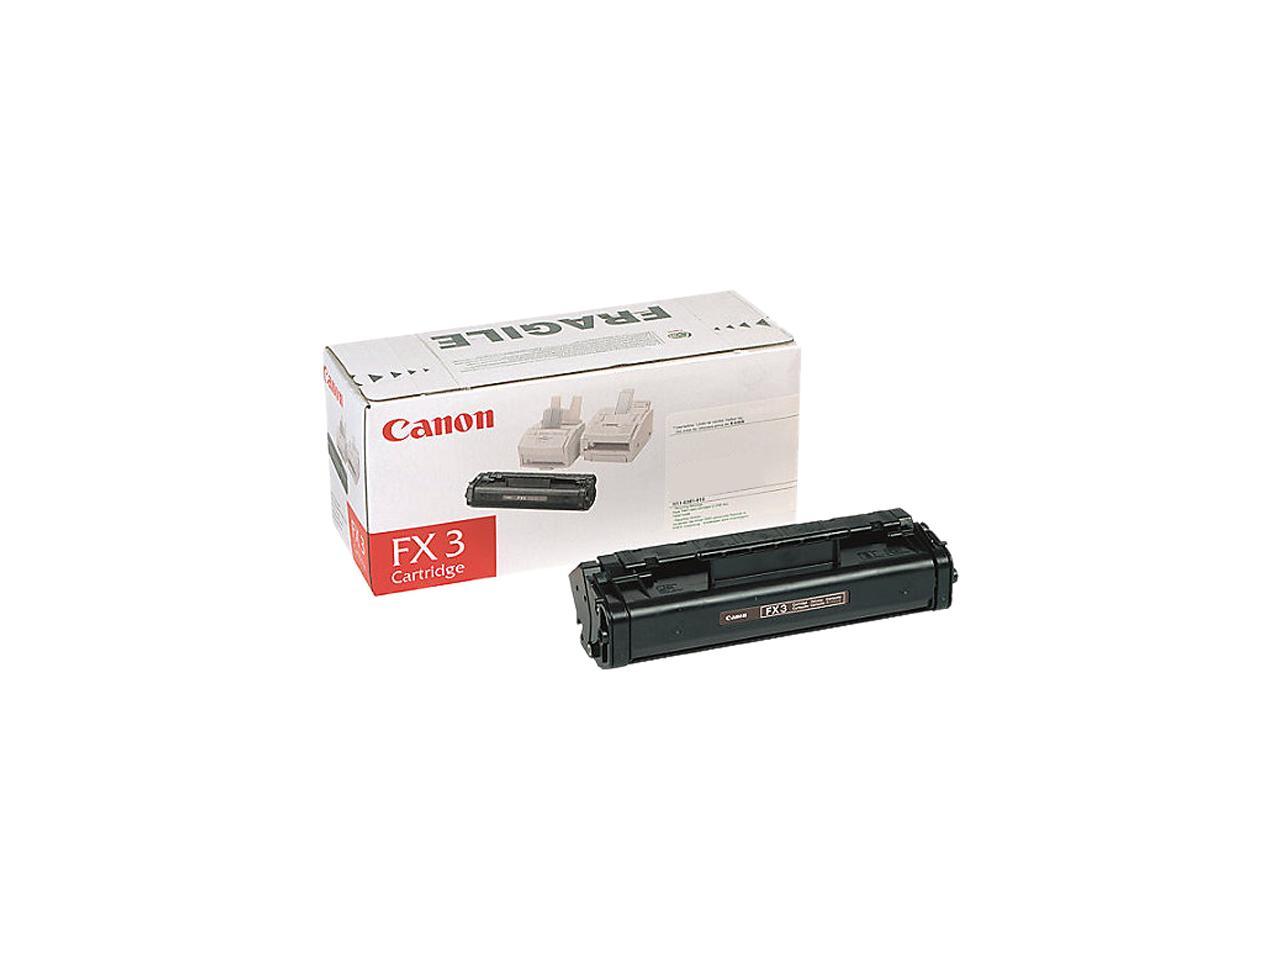 Canon FX 3 Toner Cartridge - Black